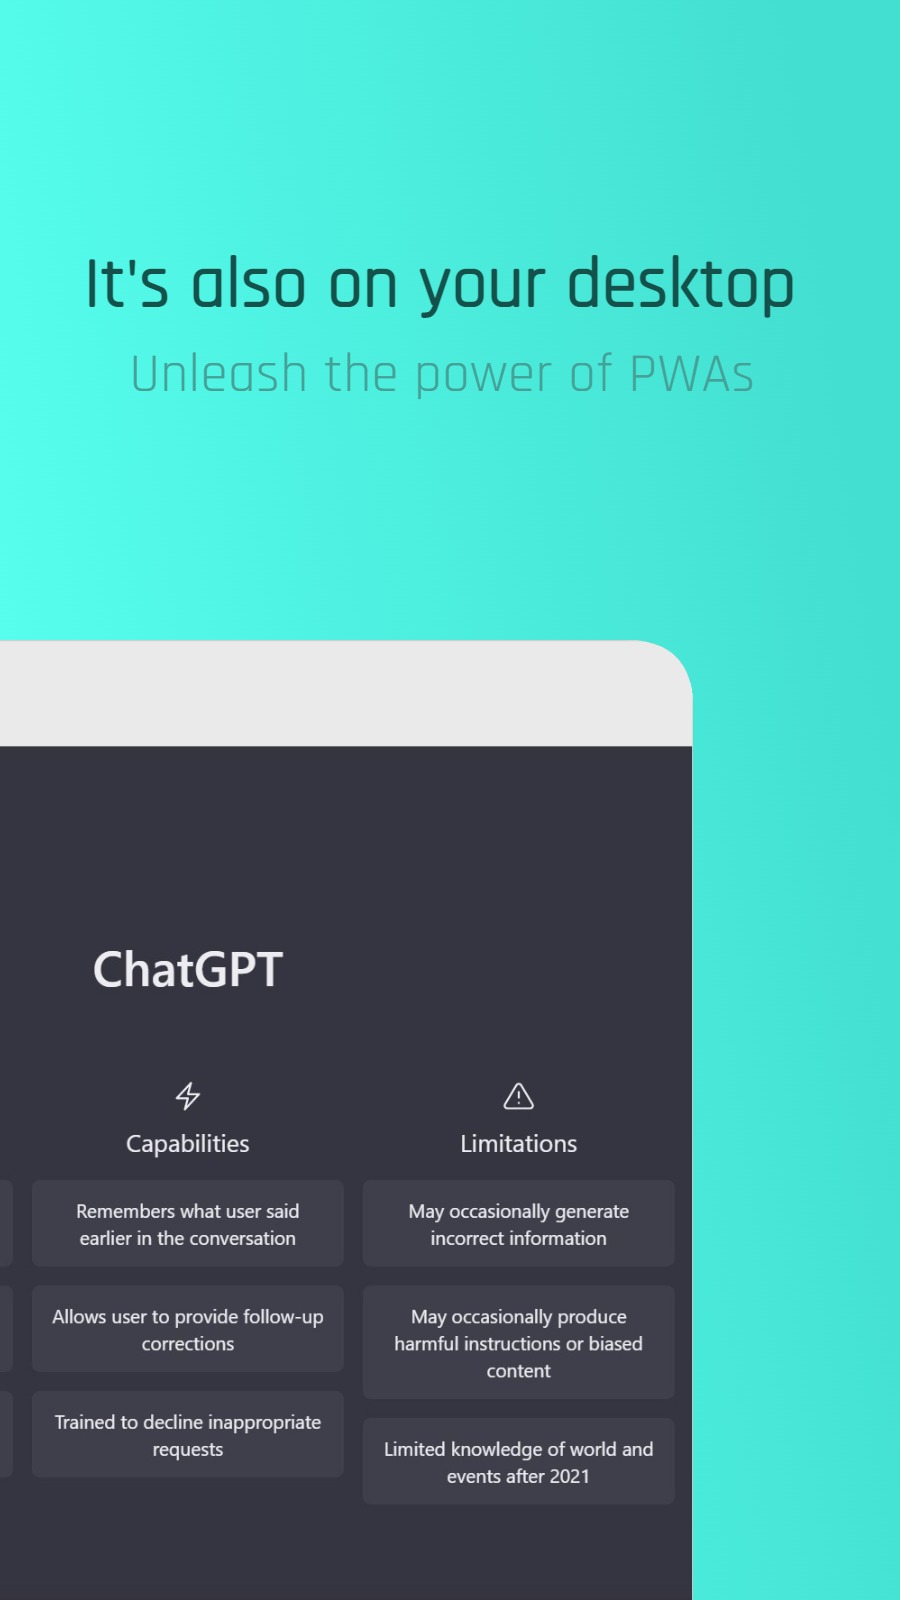 It‘s also on your desktop - Unleash the power of PWAs